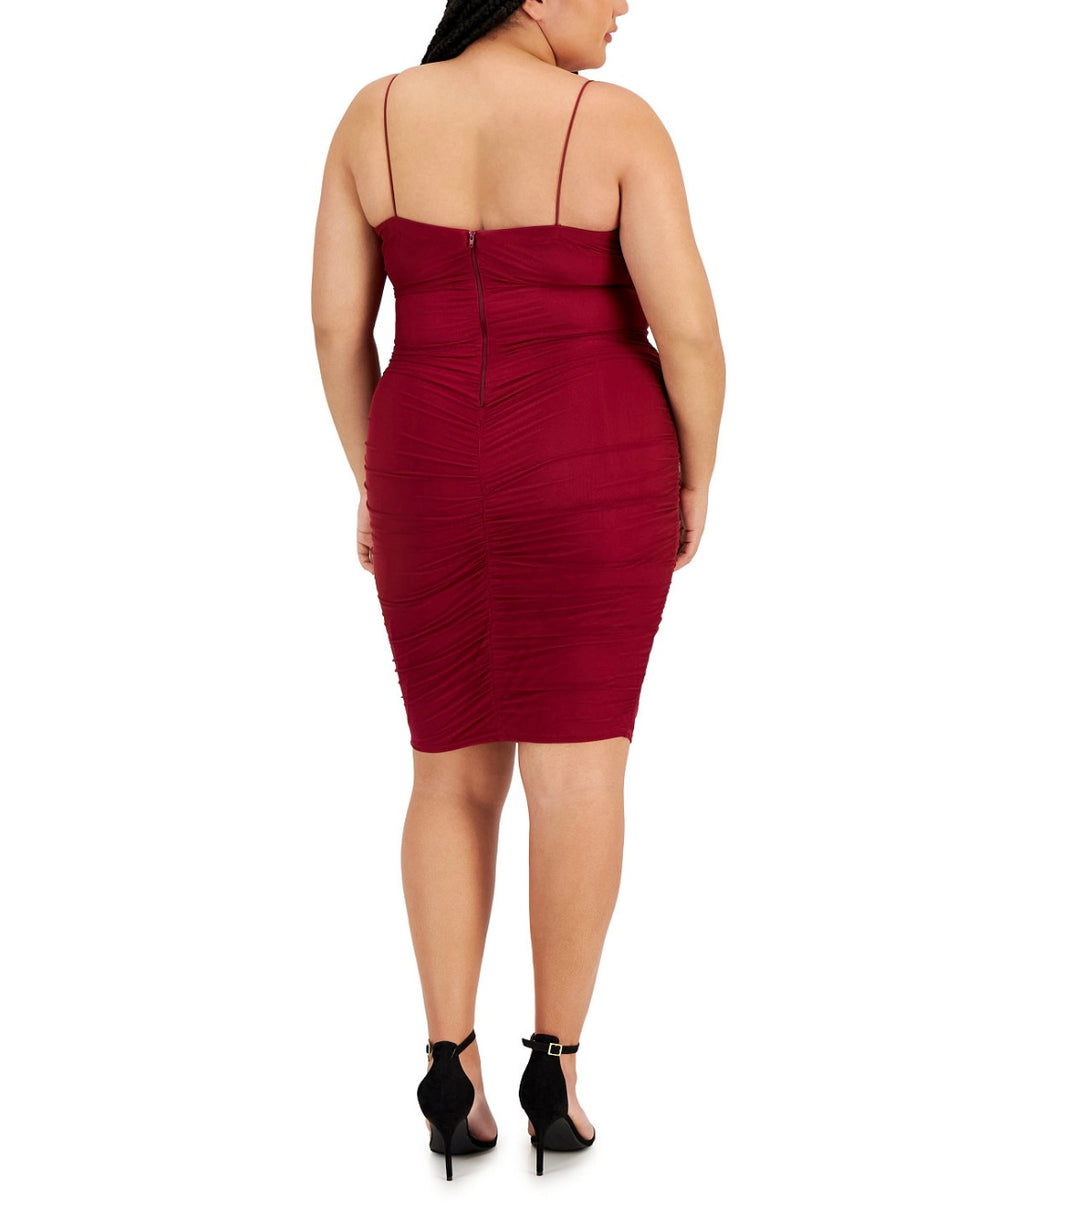 B Darlin Women's Trendy Bungee-Strap Square-Neck Bodycon Dress Plus Size 16W